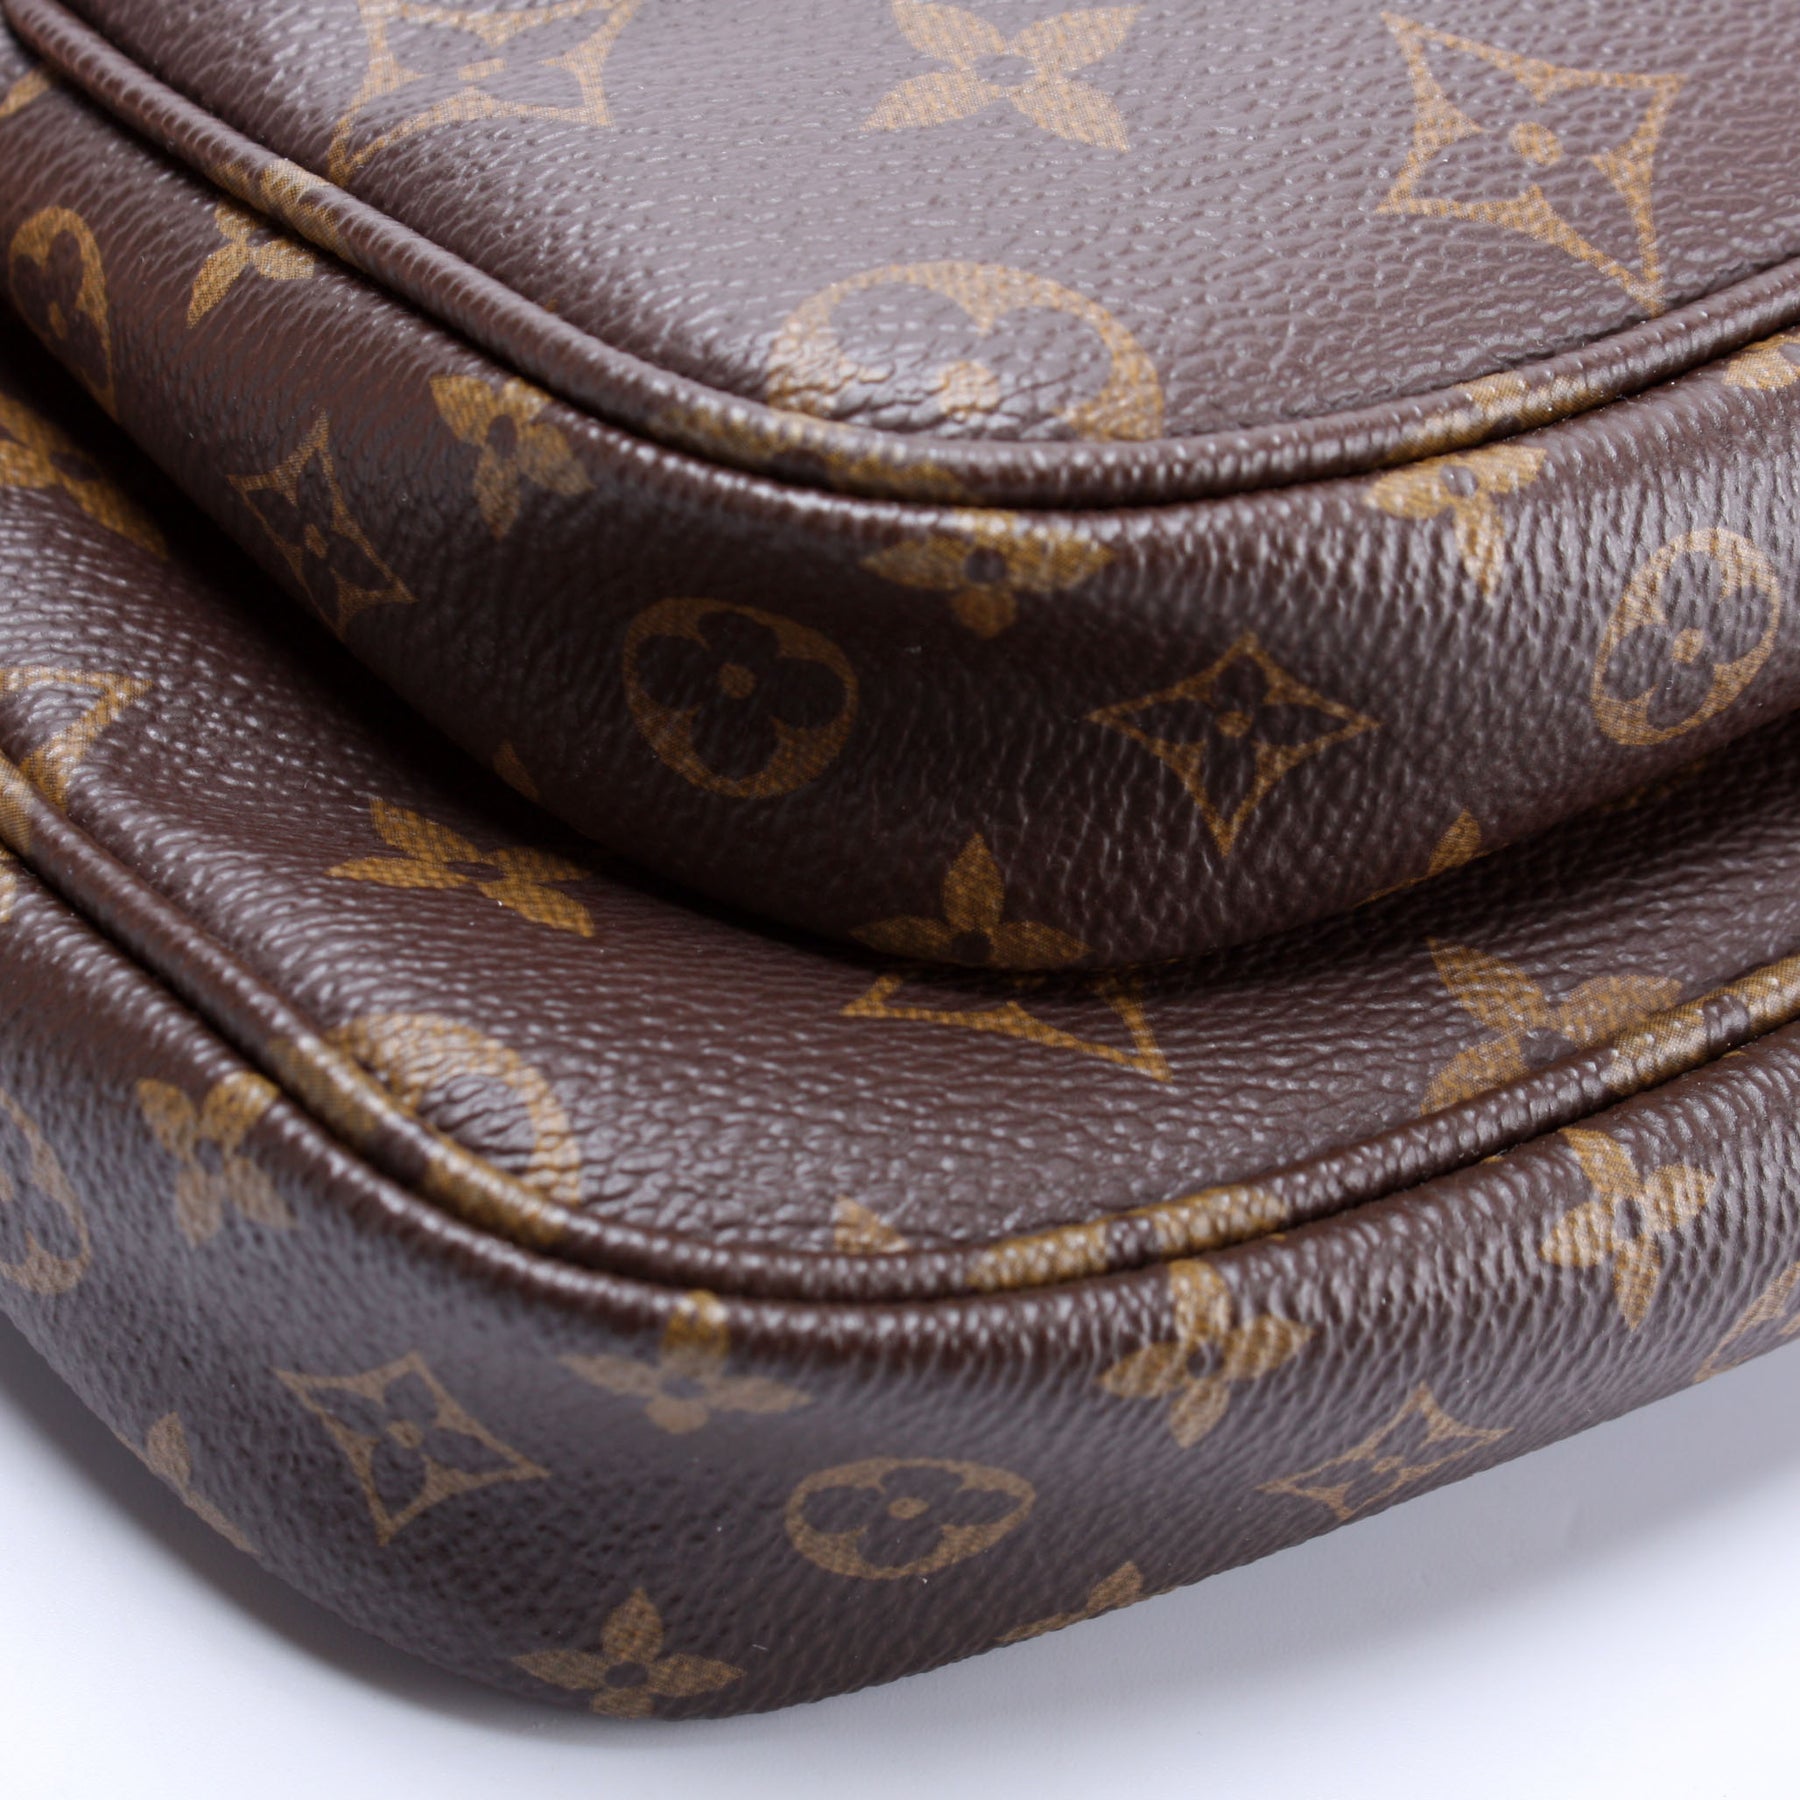 Multi Pochette Strap – Keeks Designer Handbags